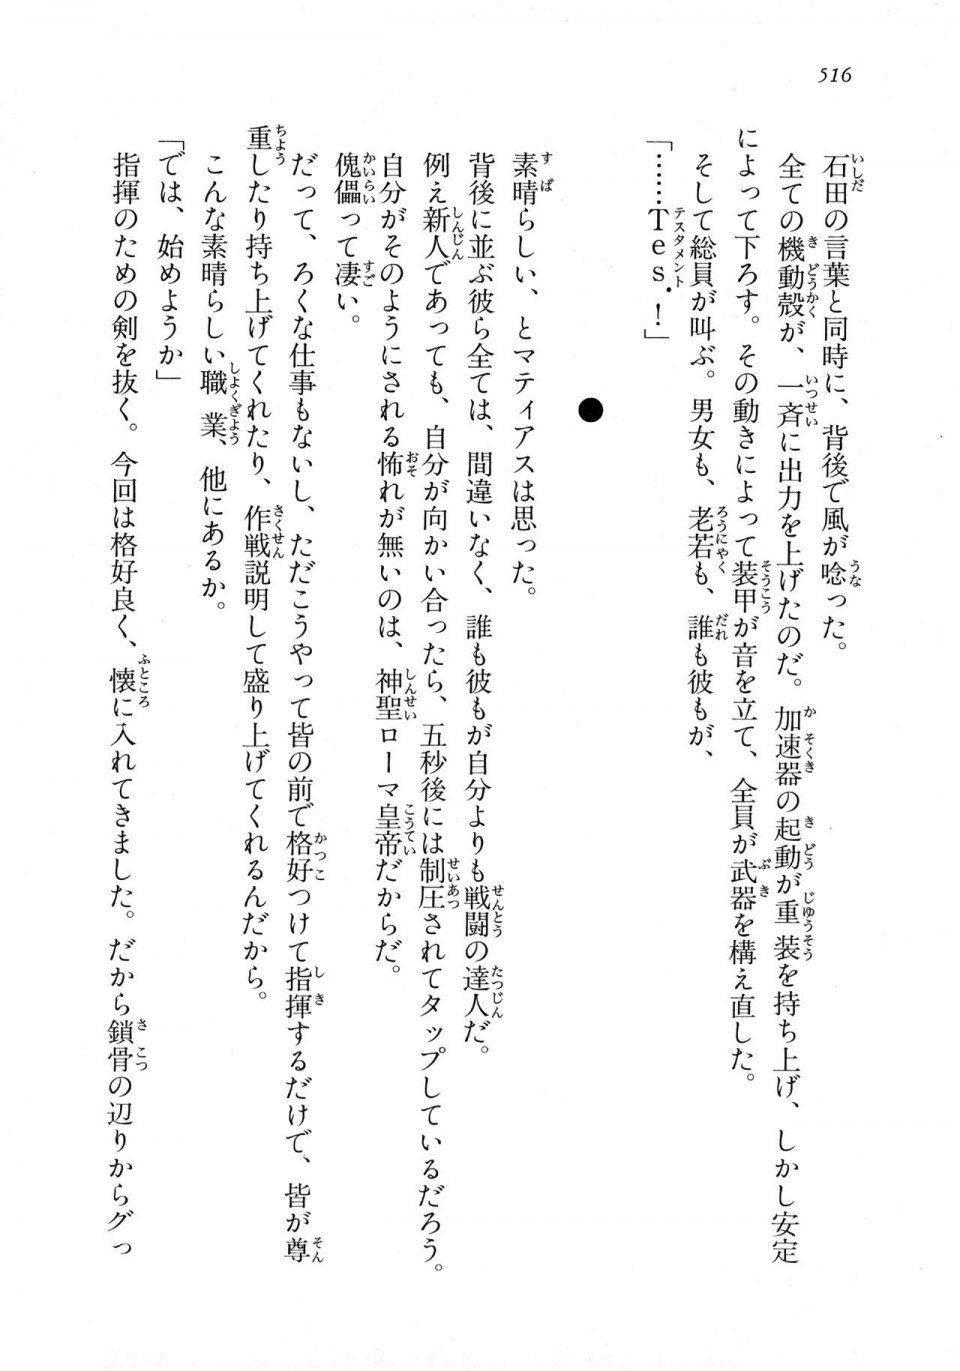 Kyoukai Senjou no Horizon LN Vol 18(7C) Part 1 - Photo #516